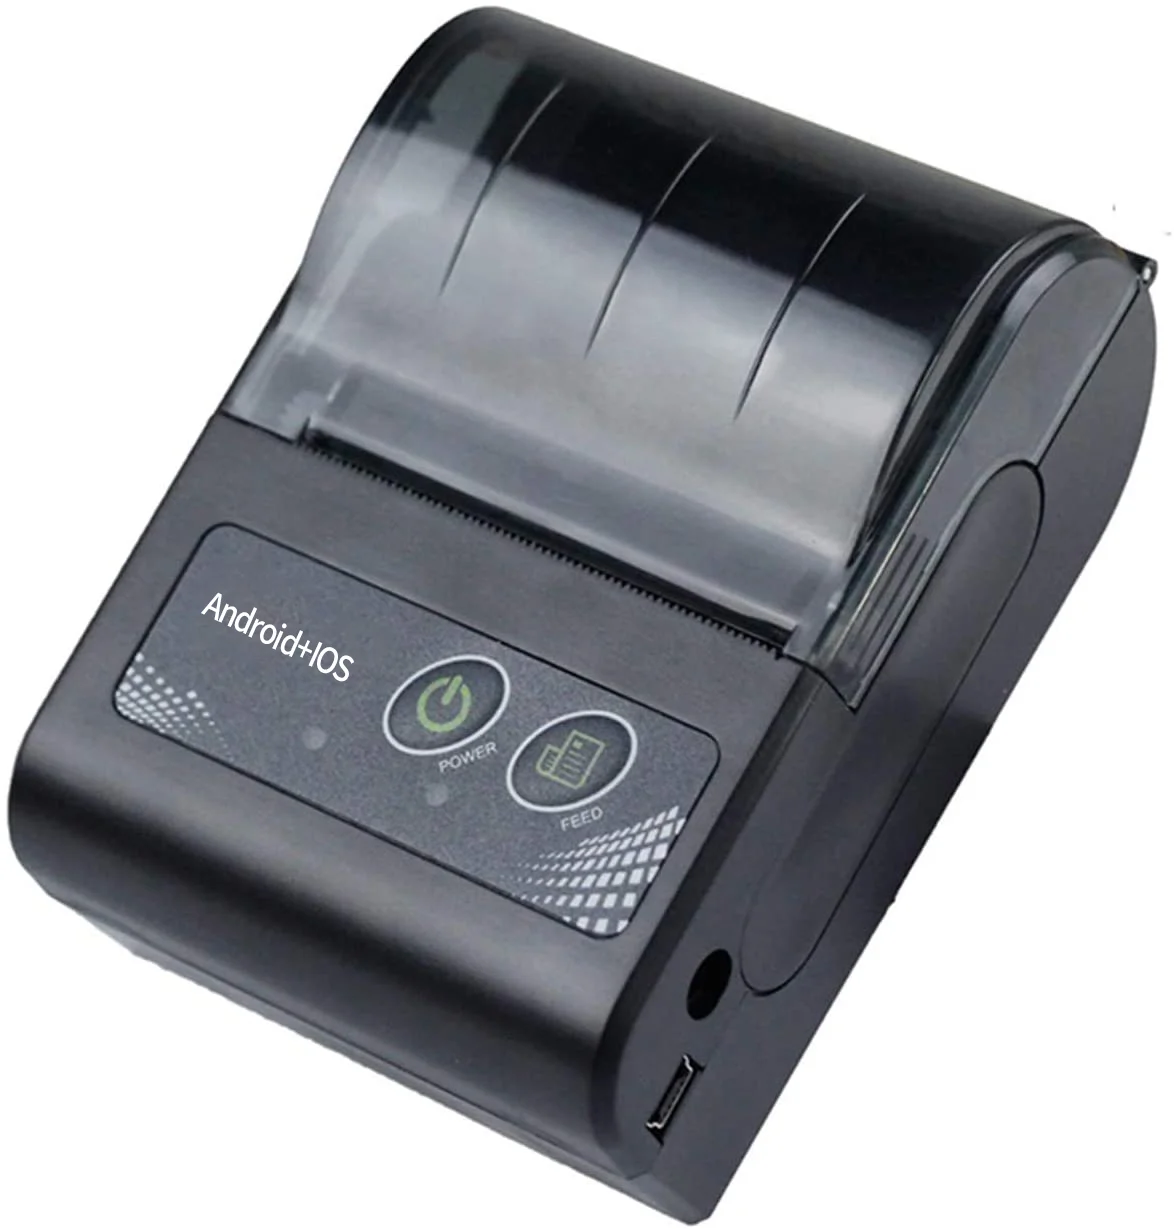 

58mm Thermal Receipt Printer Portable Mini Wireless Thermal Printer USB Receipt Bill Ticket POS Printing for iOS Android Windows